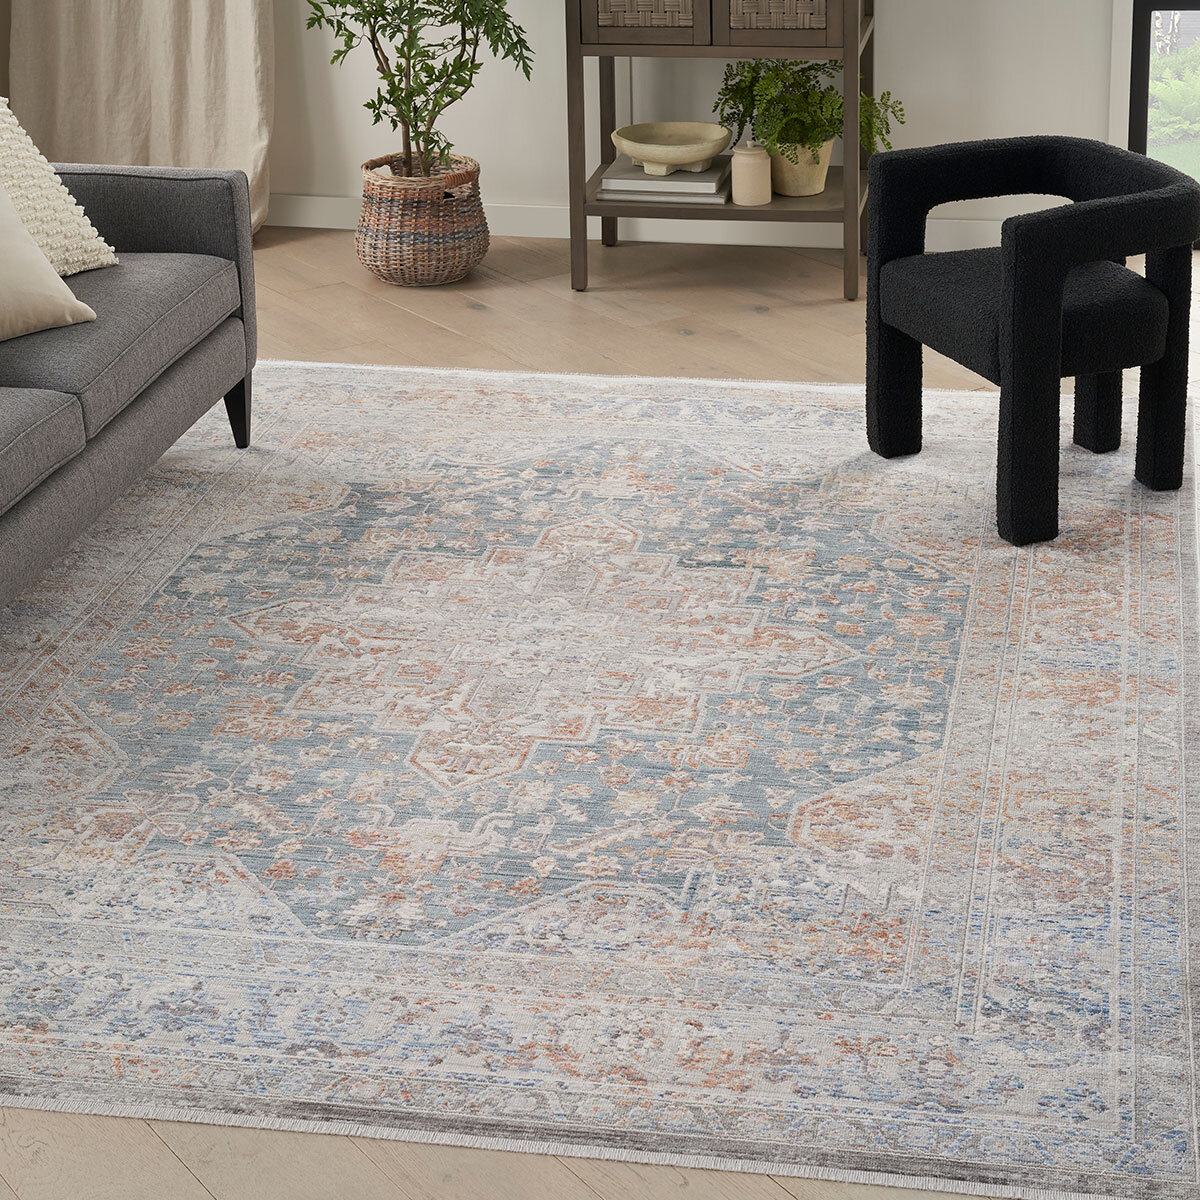 Elegant heirloom rug, tradtional design in blue, grey, rust and ivory tones